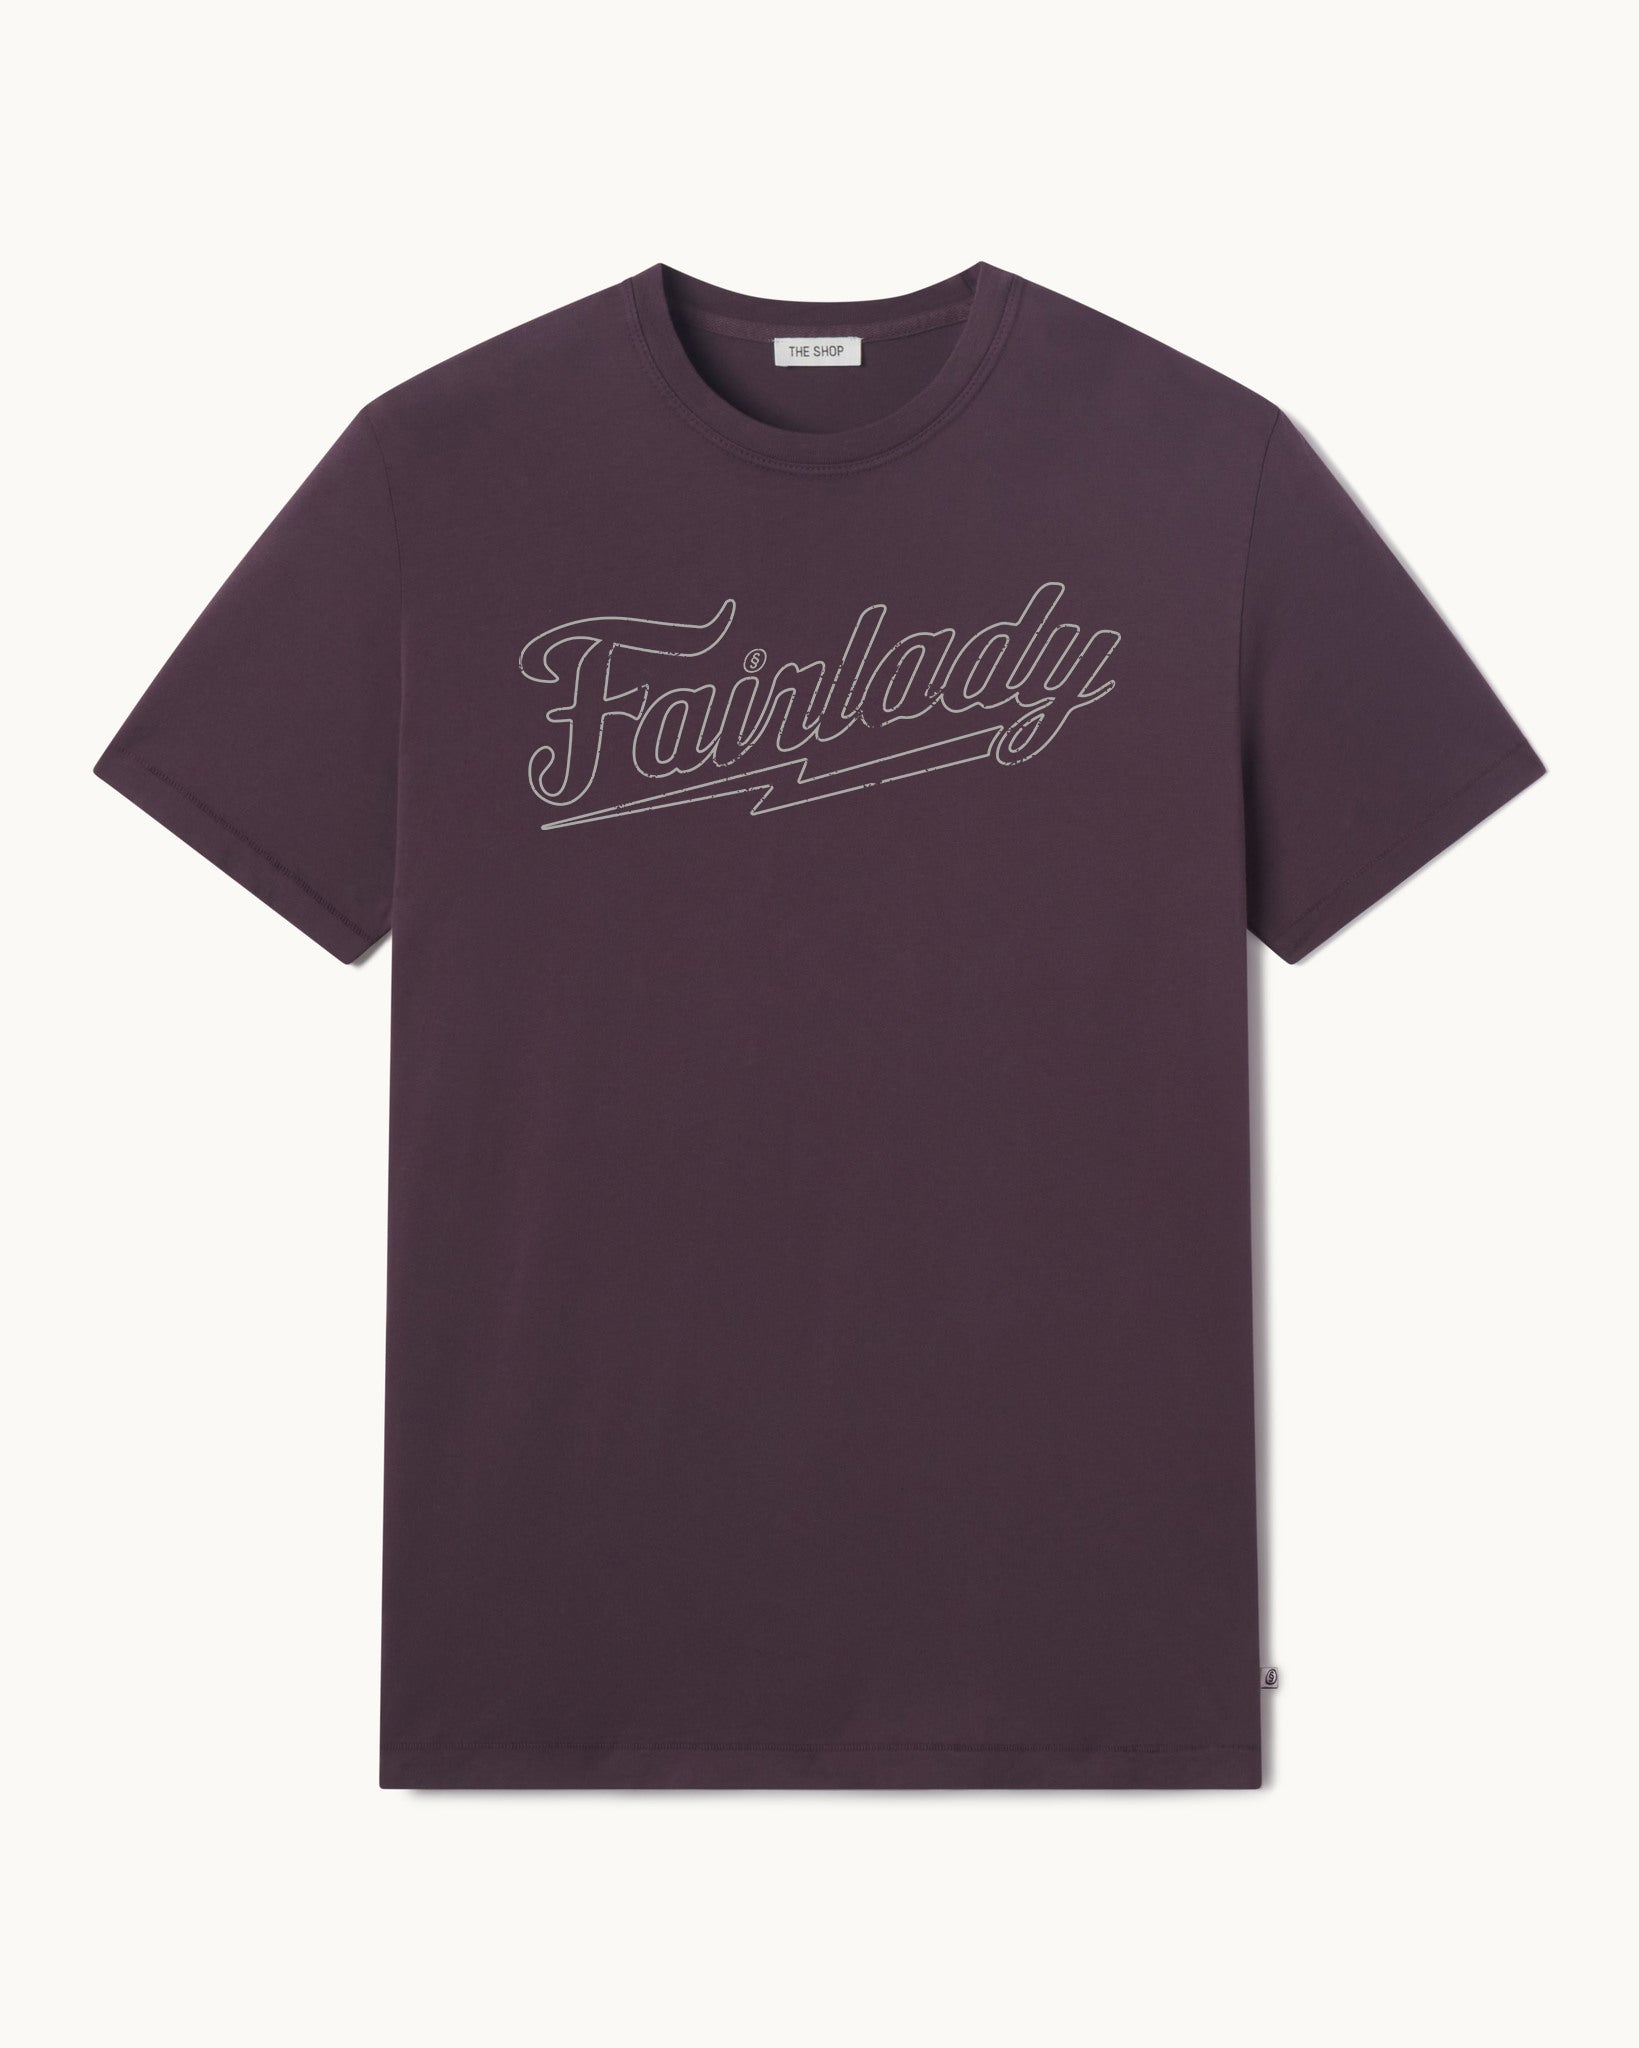 Fairlady Graphic T-Shirt